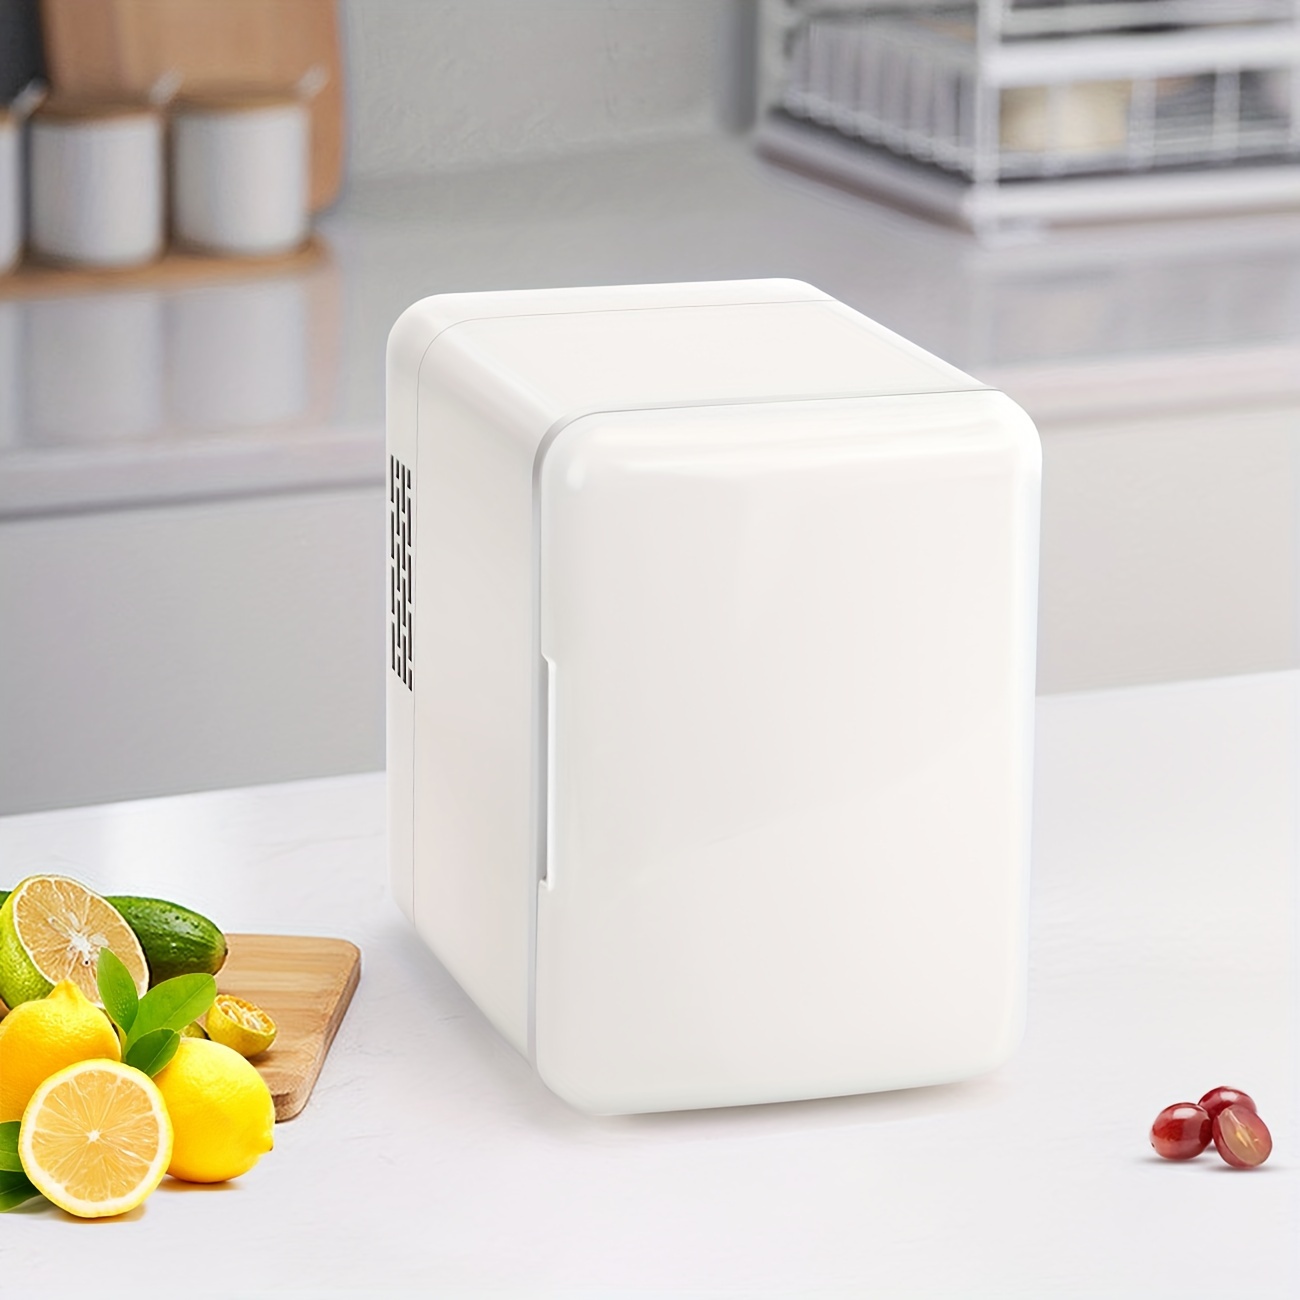 Mini Fridge Portable Refrigerator Skin Care Cosmetic - Temu